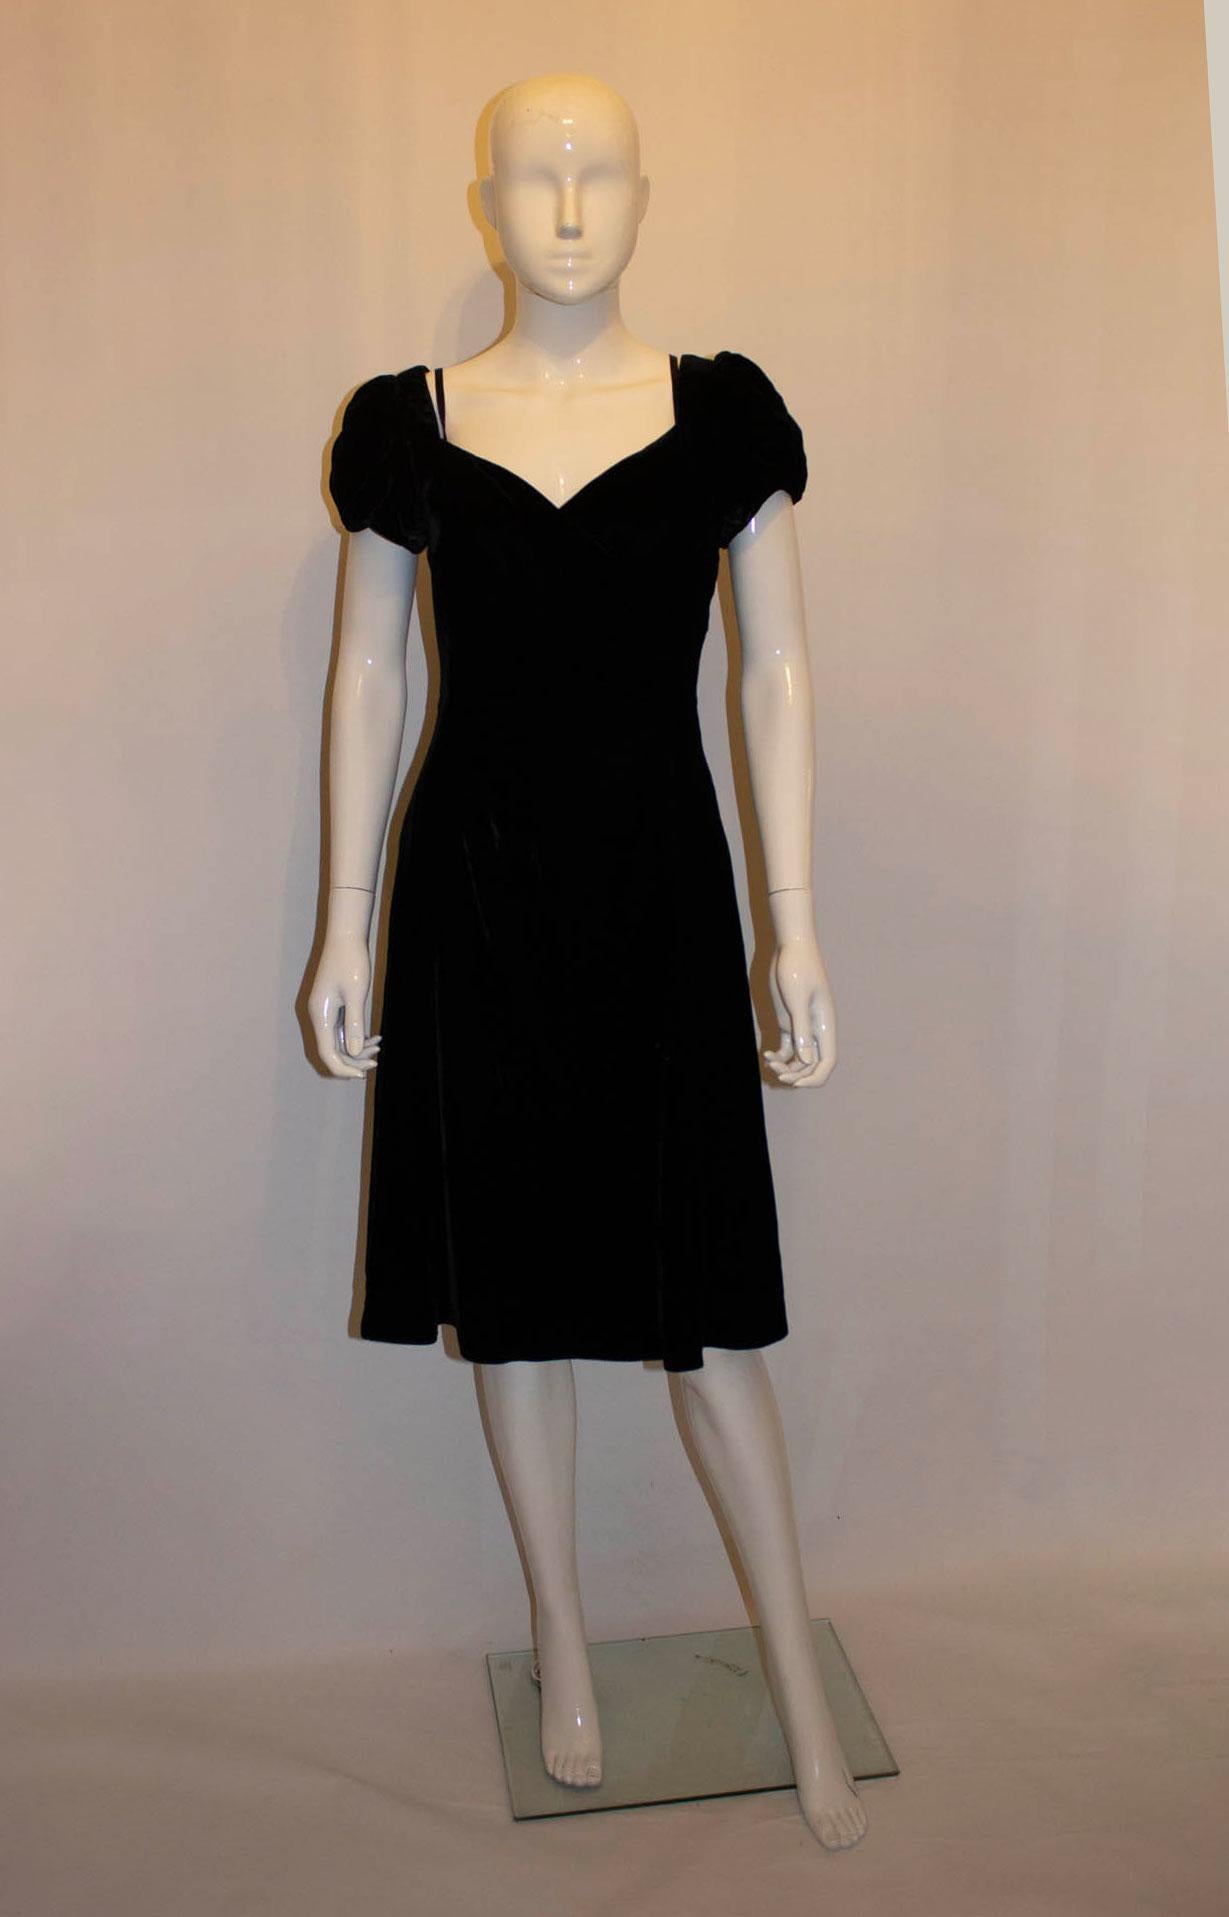 Aramani Le Collezzioni Black Velvet Cocktail Dress In Good Condition For Sale In London, GB